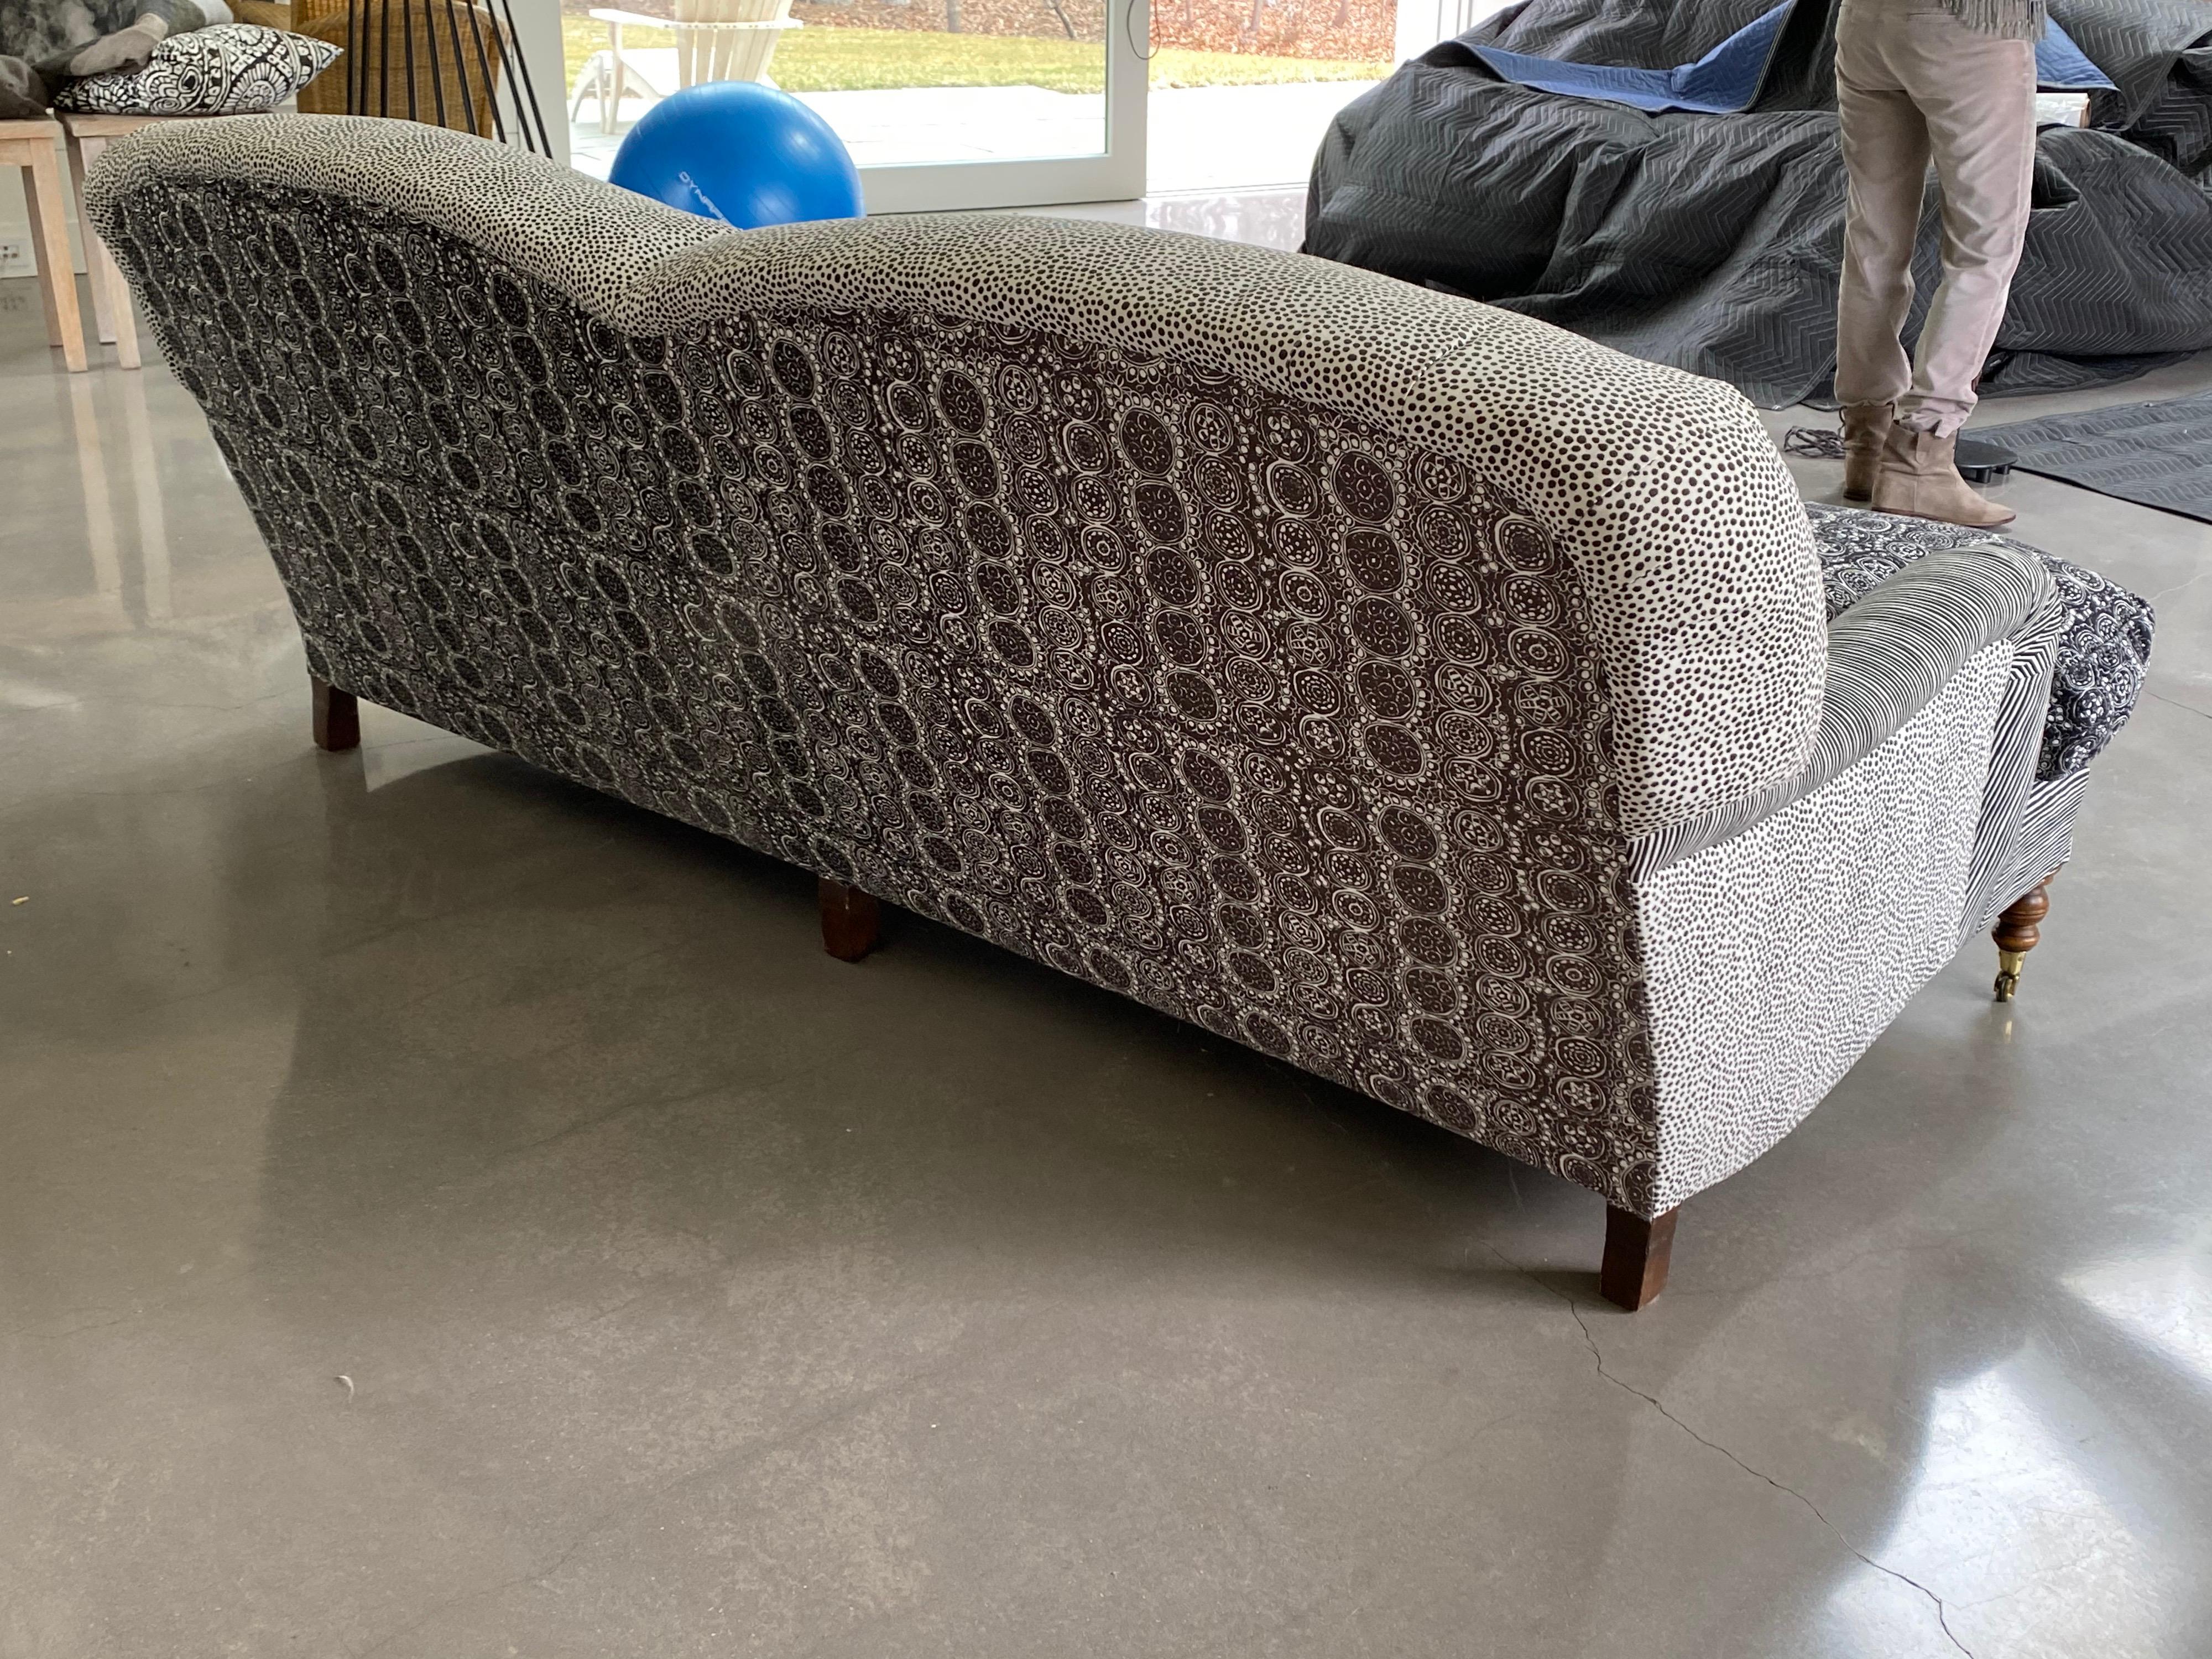 George Sherlock Extended Two Seater Sofa covered in Marimekko Fabrics 1